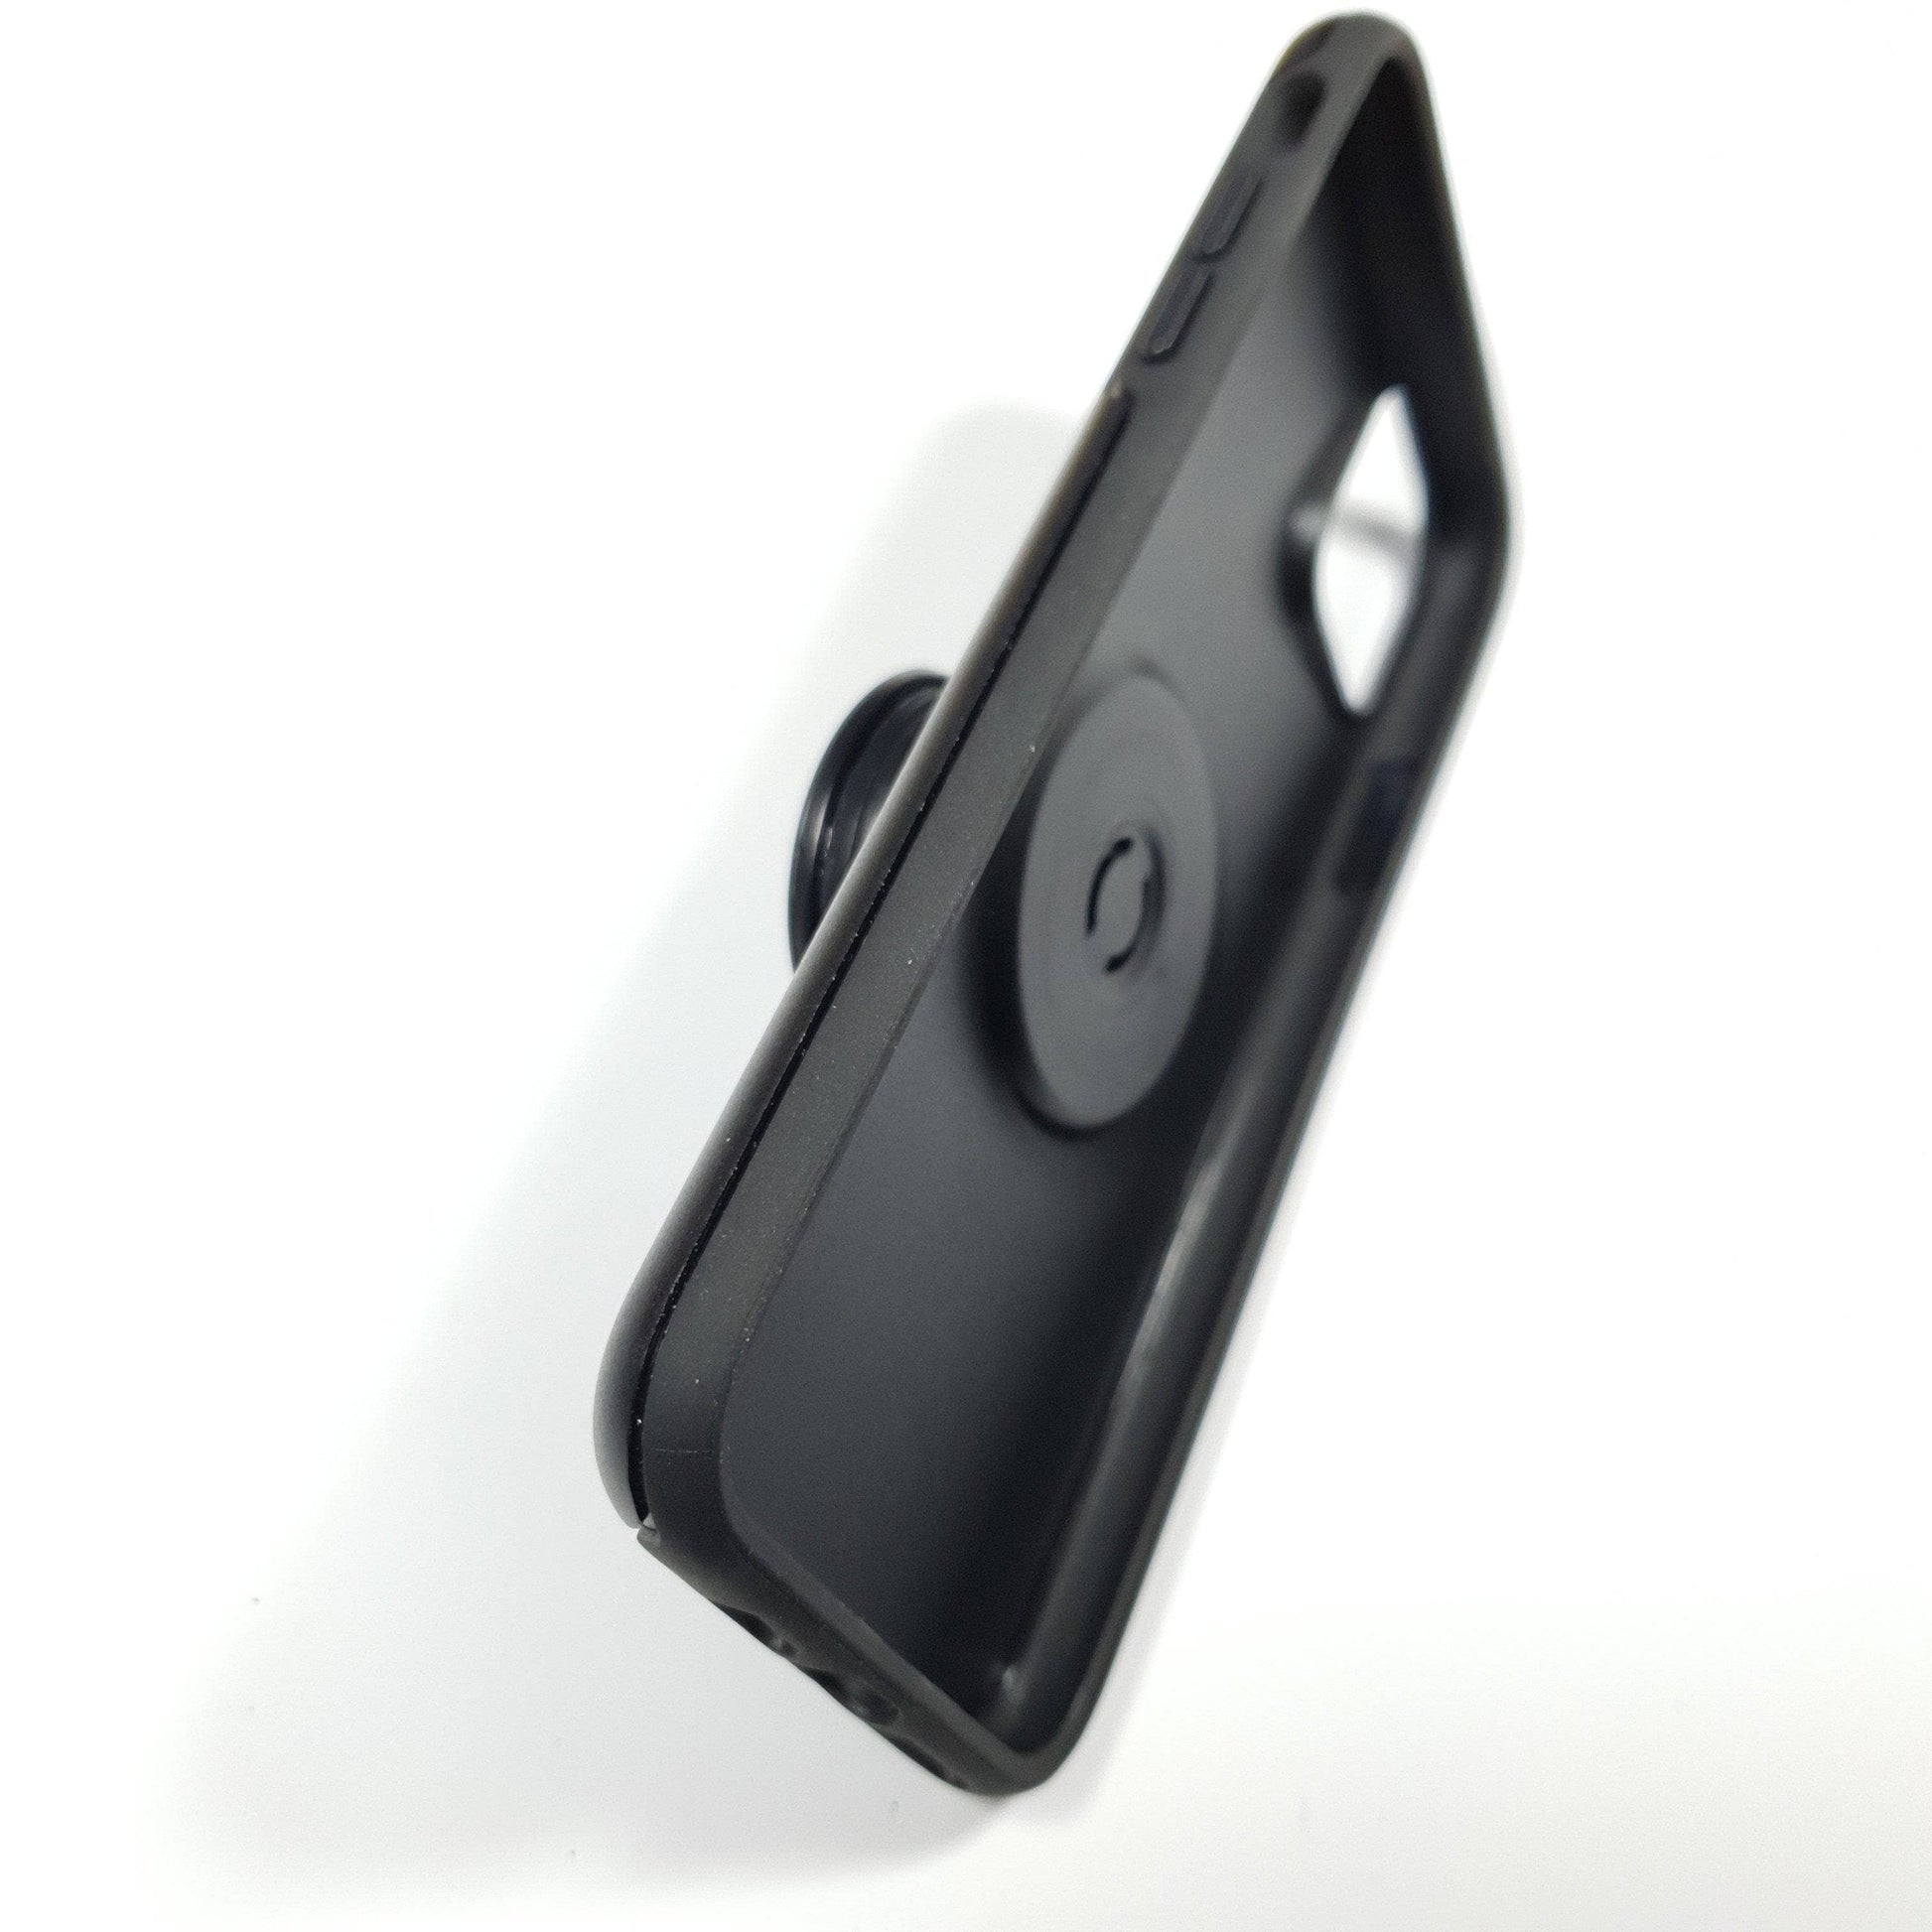 Pop up finger Grip Case Drop Proof Stand for iPhone 11 Pro Max/11 Pro/11 blk-Phone Case-Generic-www.PhoneGuy.com.au